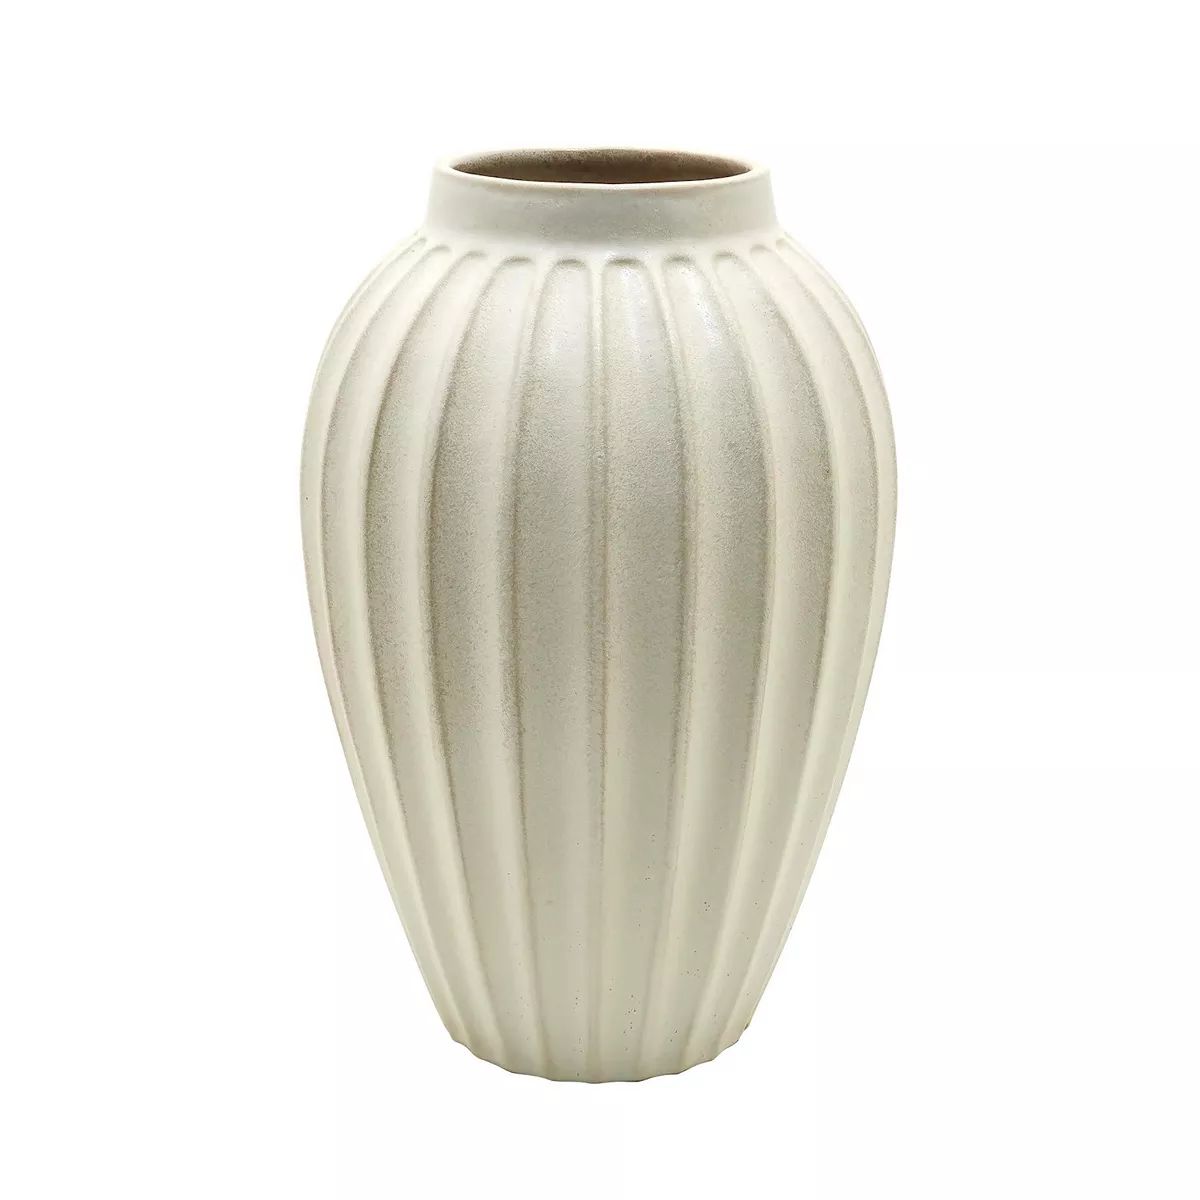 Sonoma Goods For Life® Large Round Fluted Vase Table Decor | Kohl's